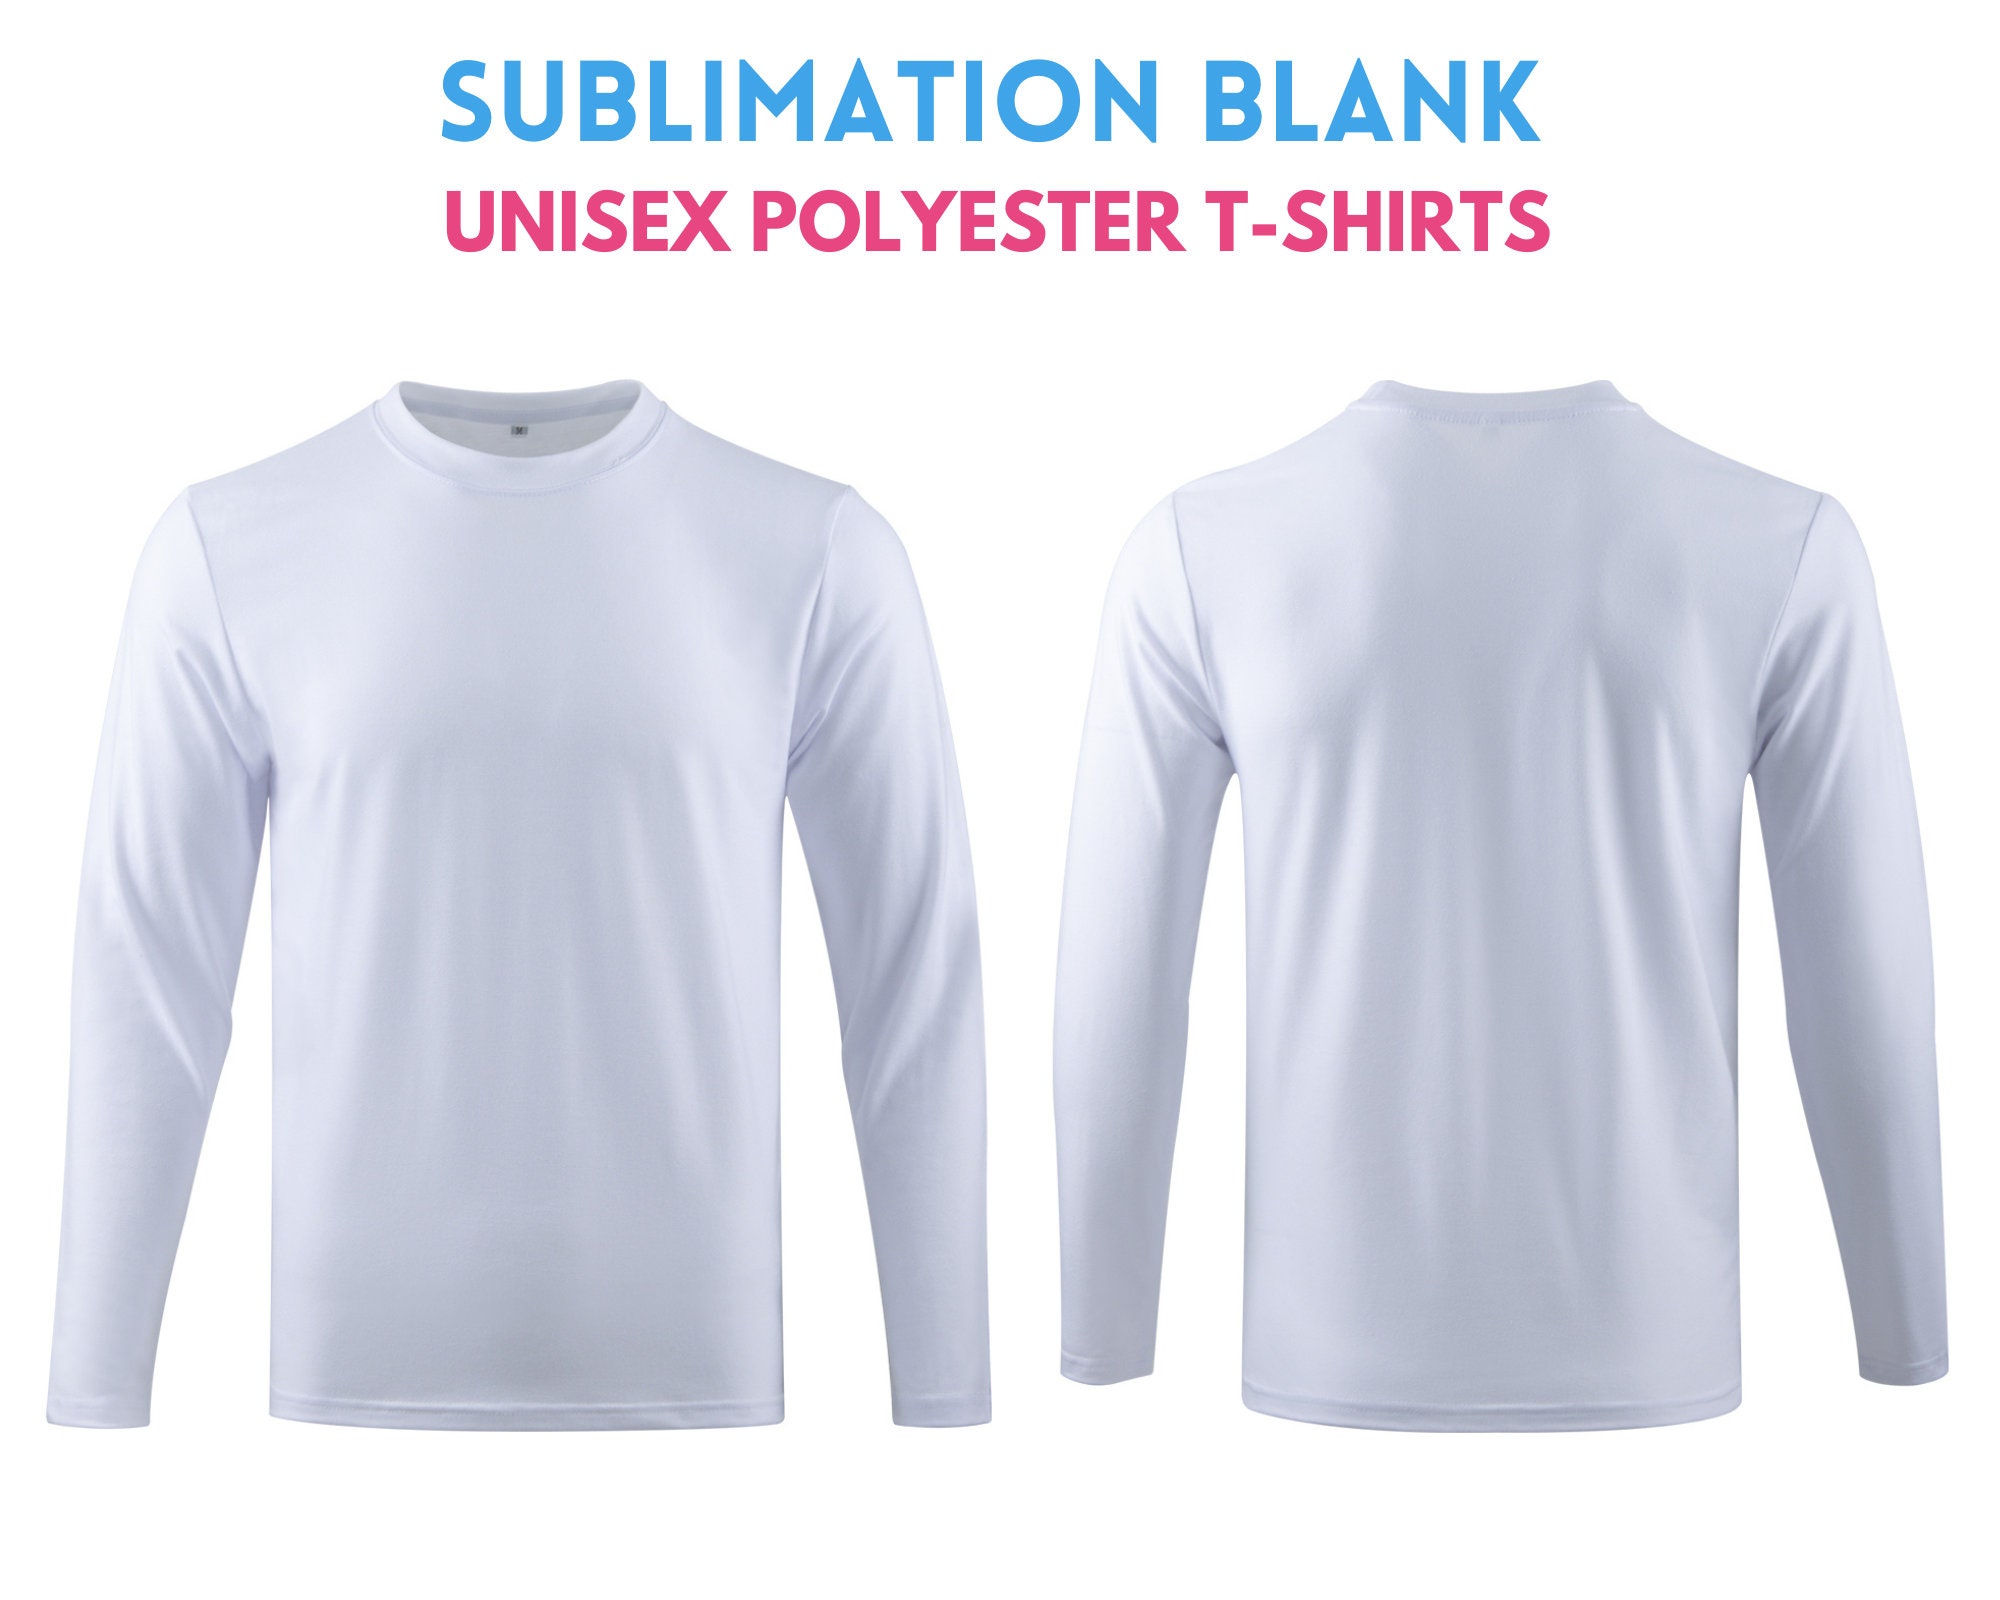 We SUB'N Unisex Superior Premium Sublimation (Heavy Cotton Feel Individually Packaged ) Adult Medium